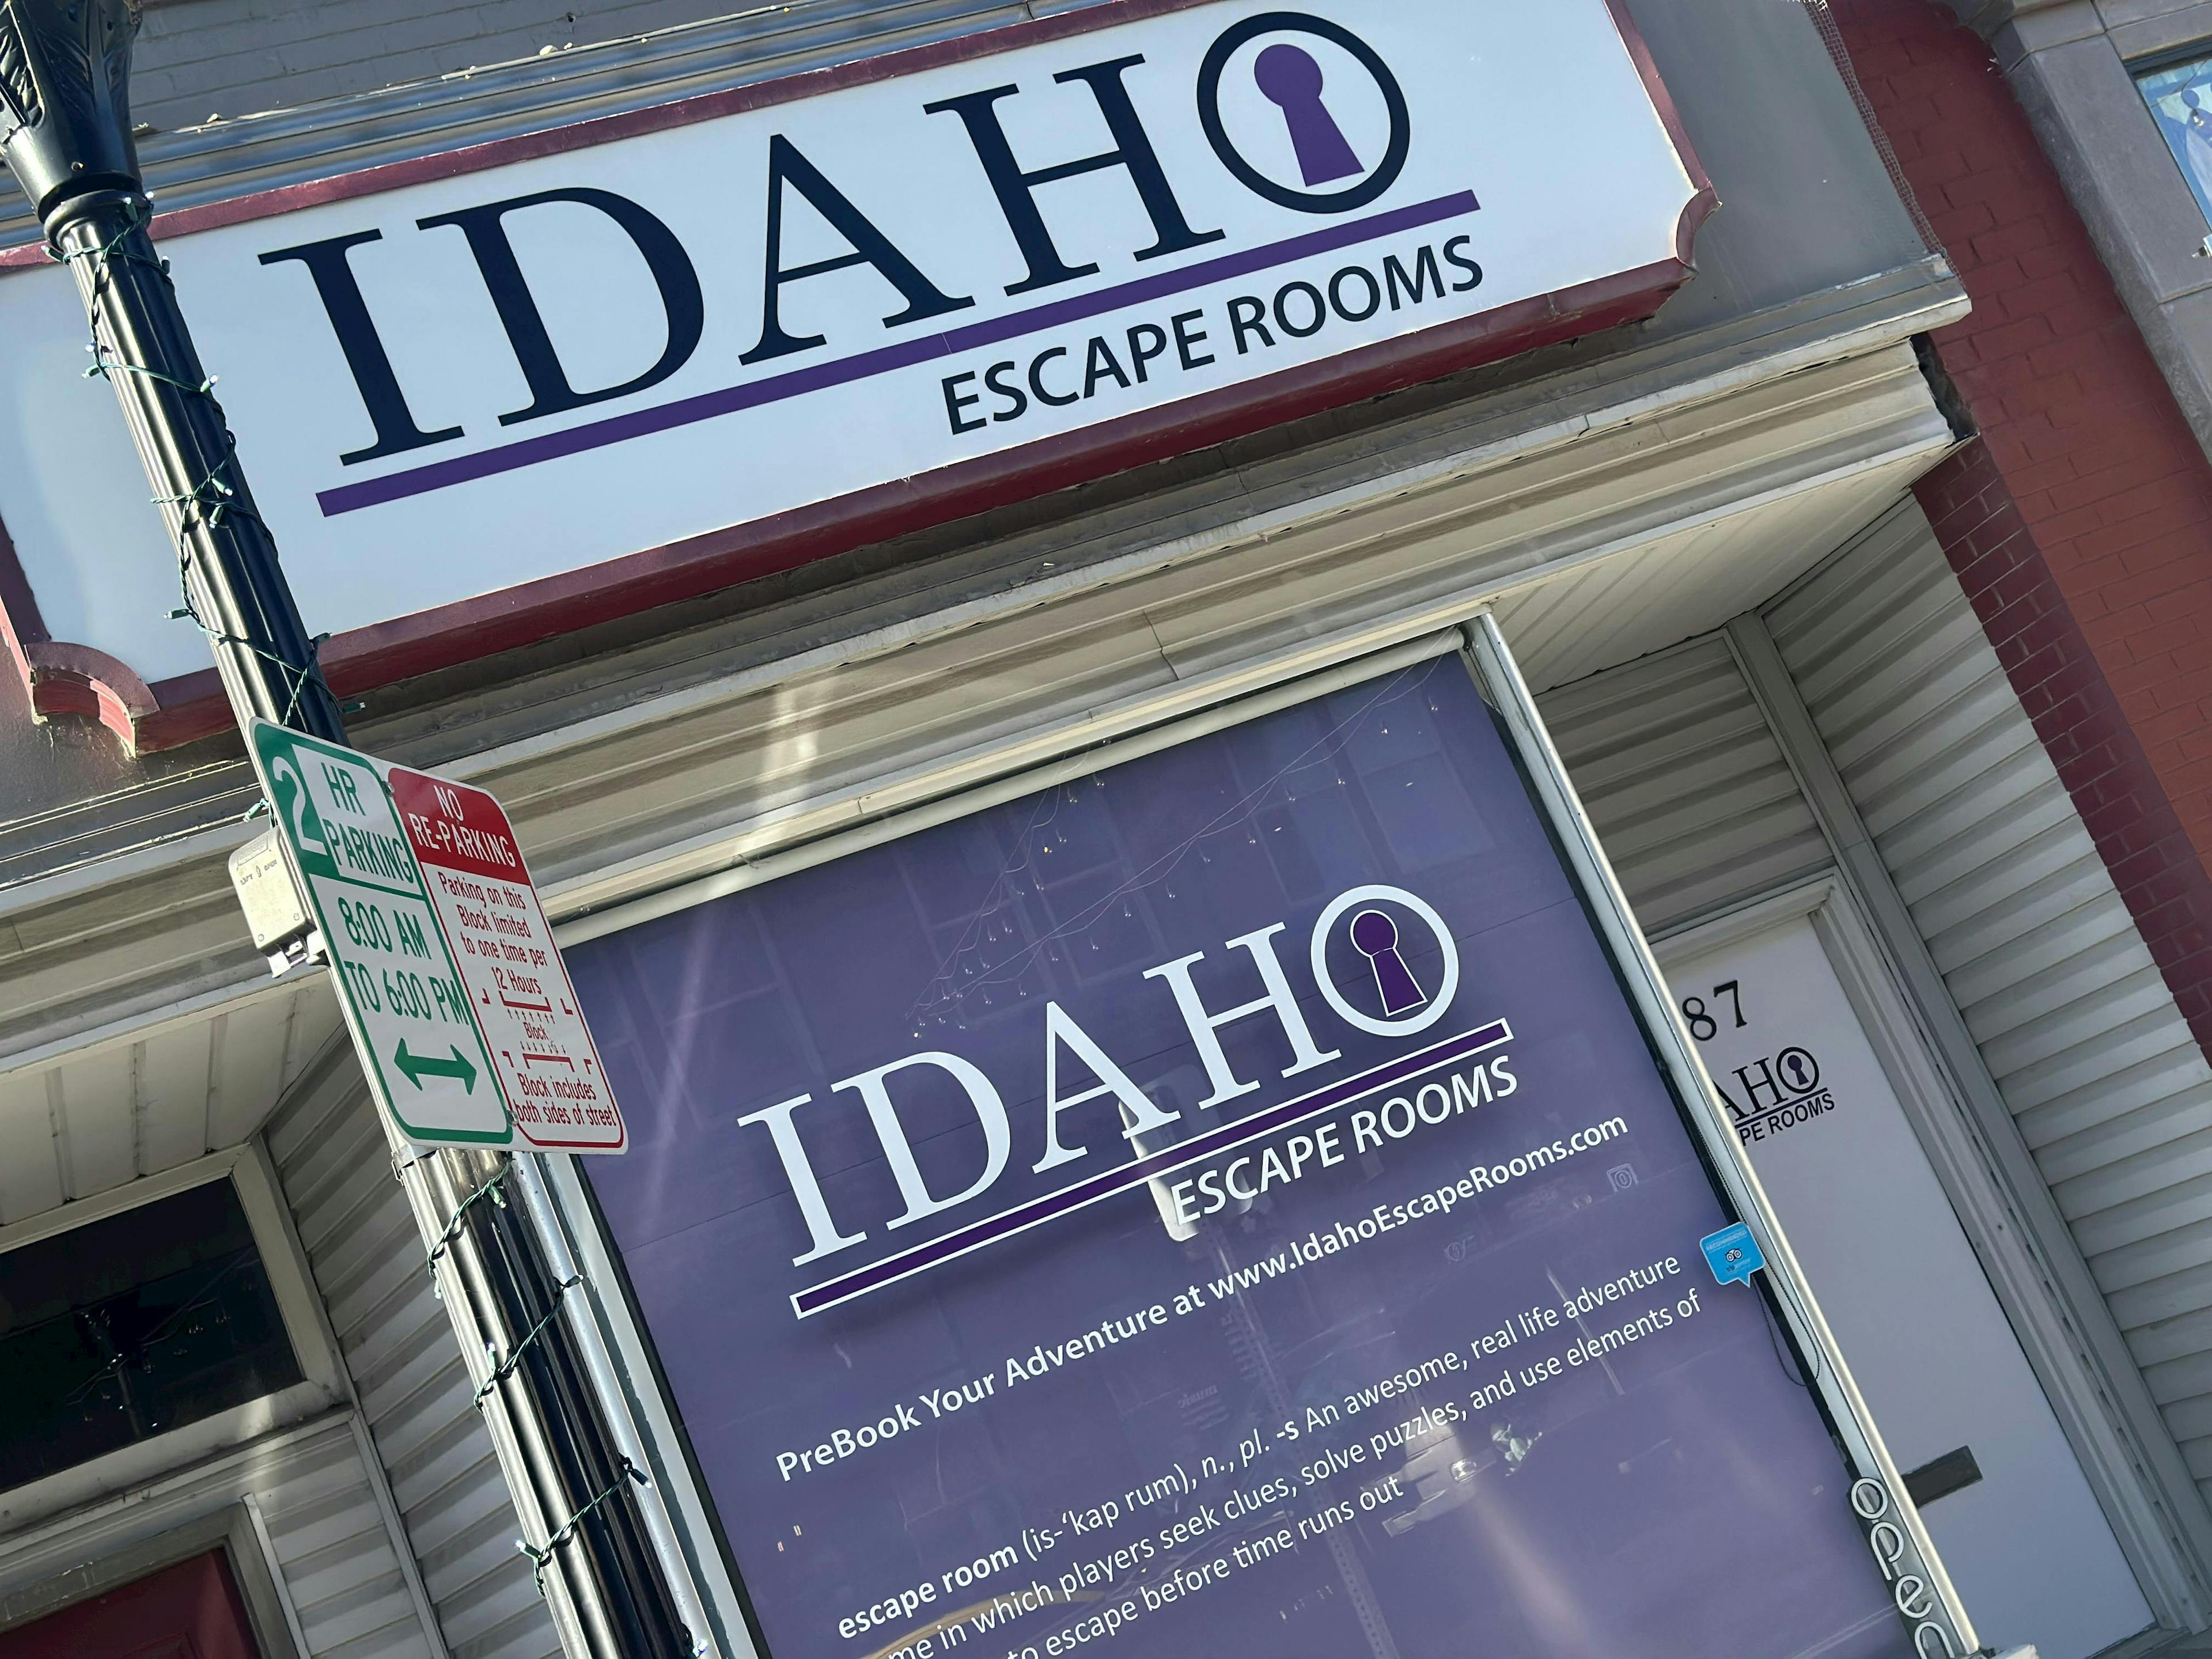 Escape Rooms in downtown Idaho Falls, Idaho.